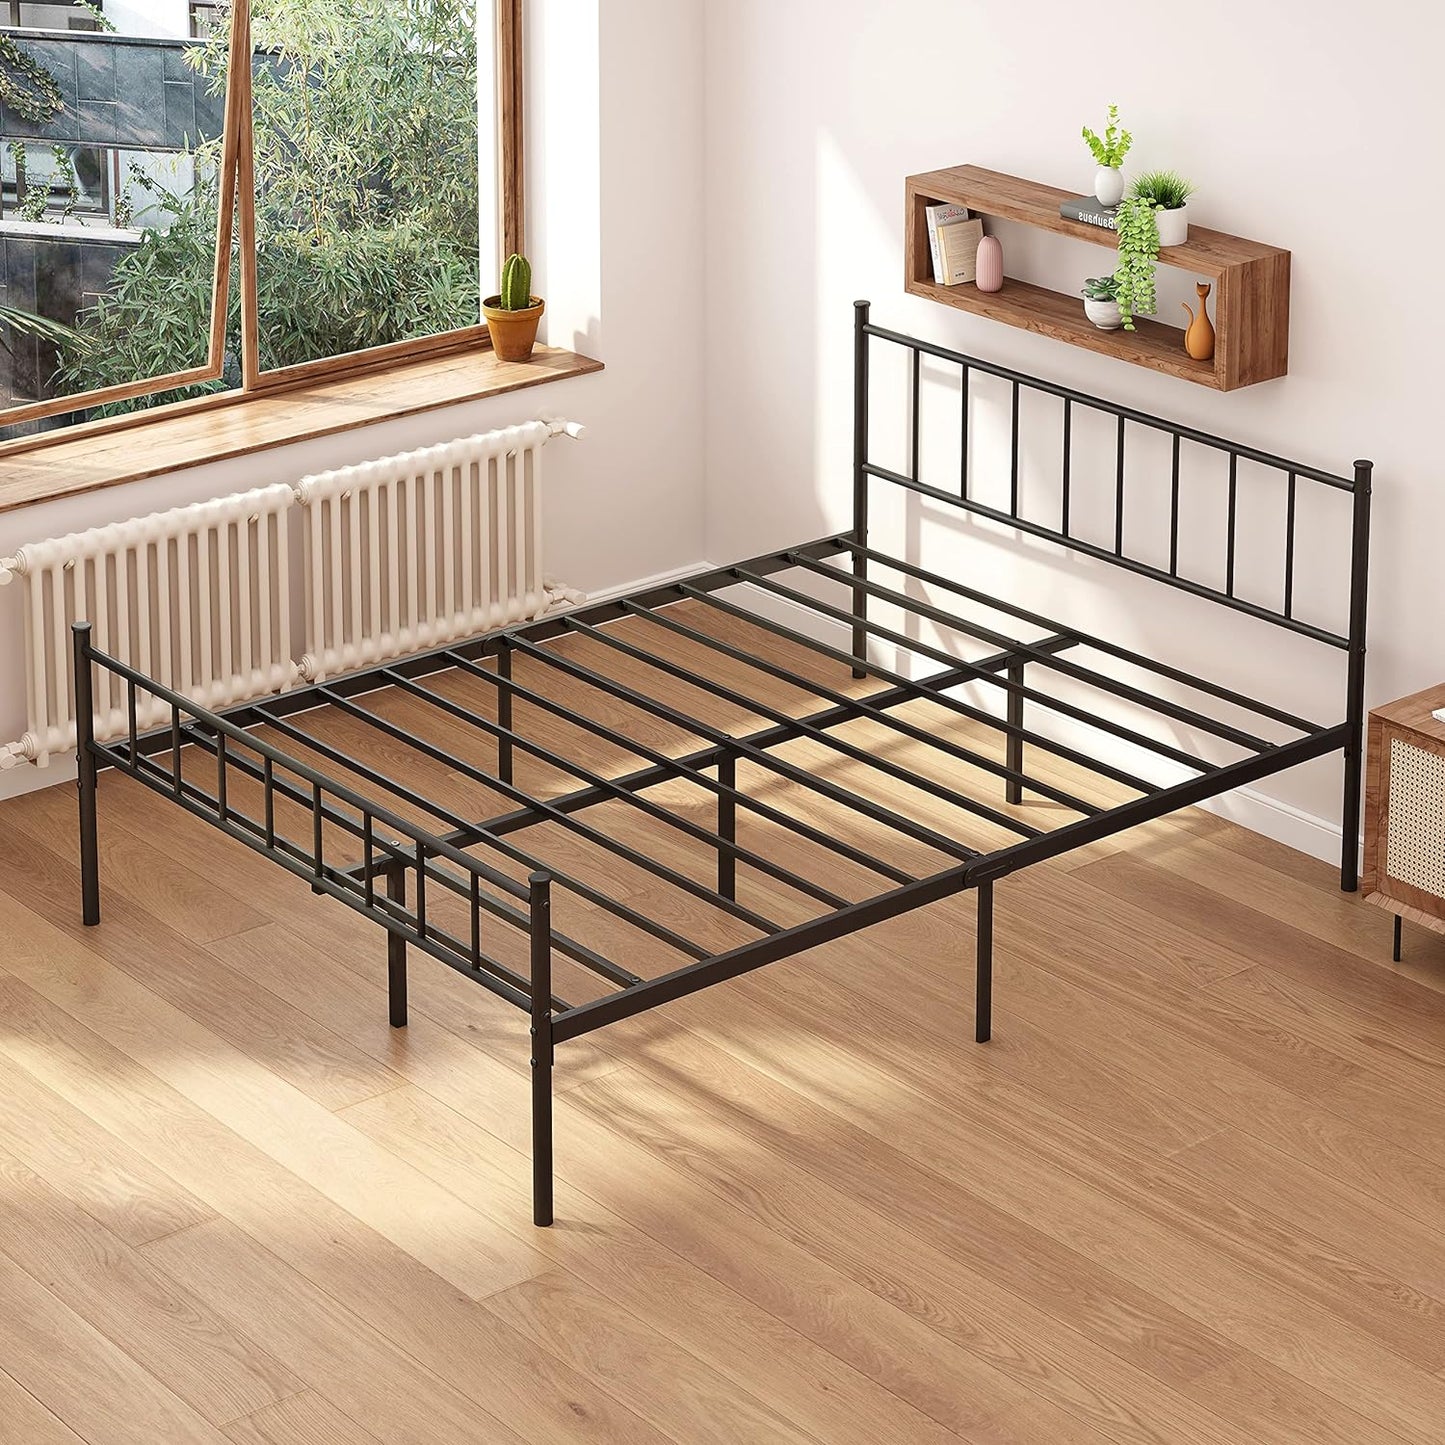 Nefoso Bed Frame with Headboard, 14 inch Metal Platform Bed Frame, Black